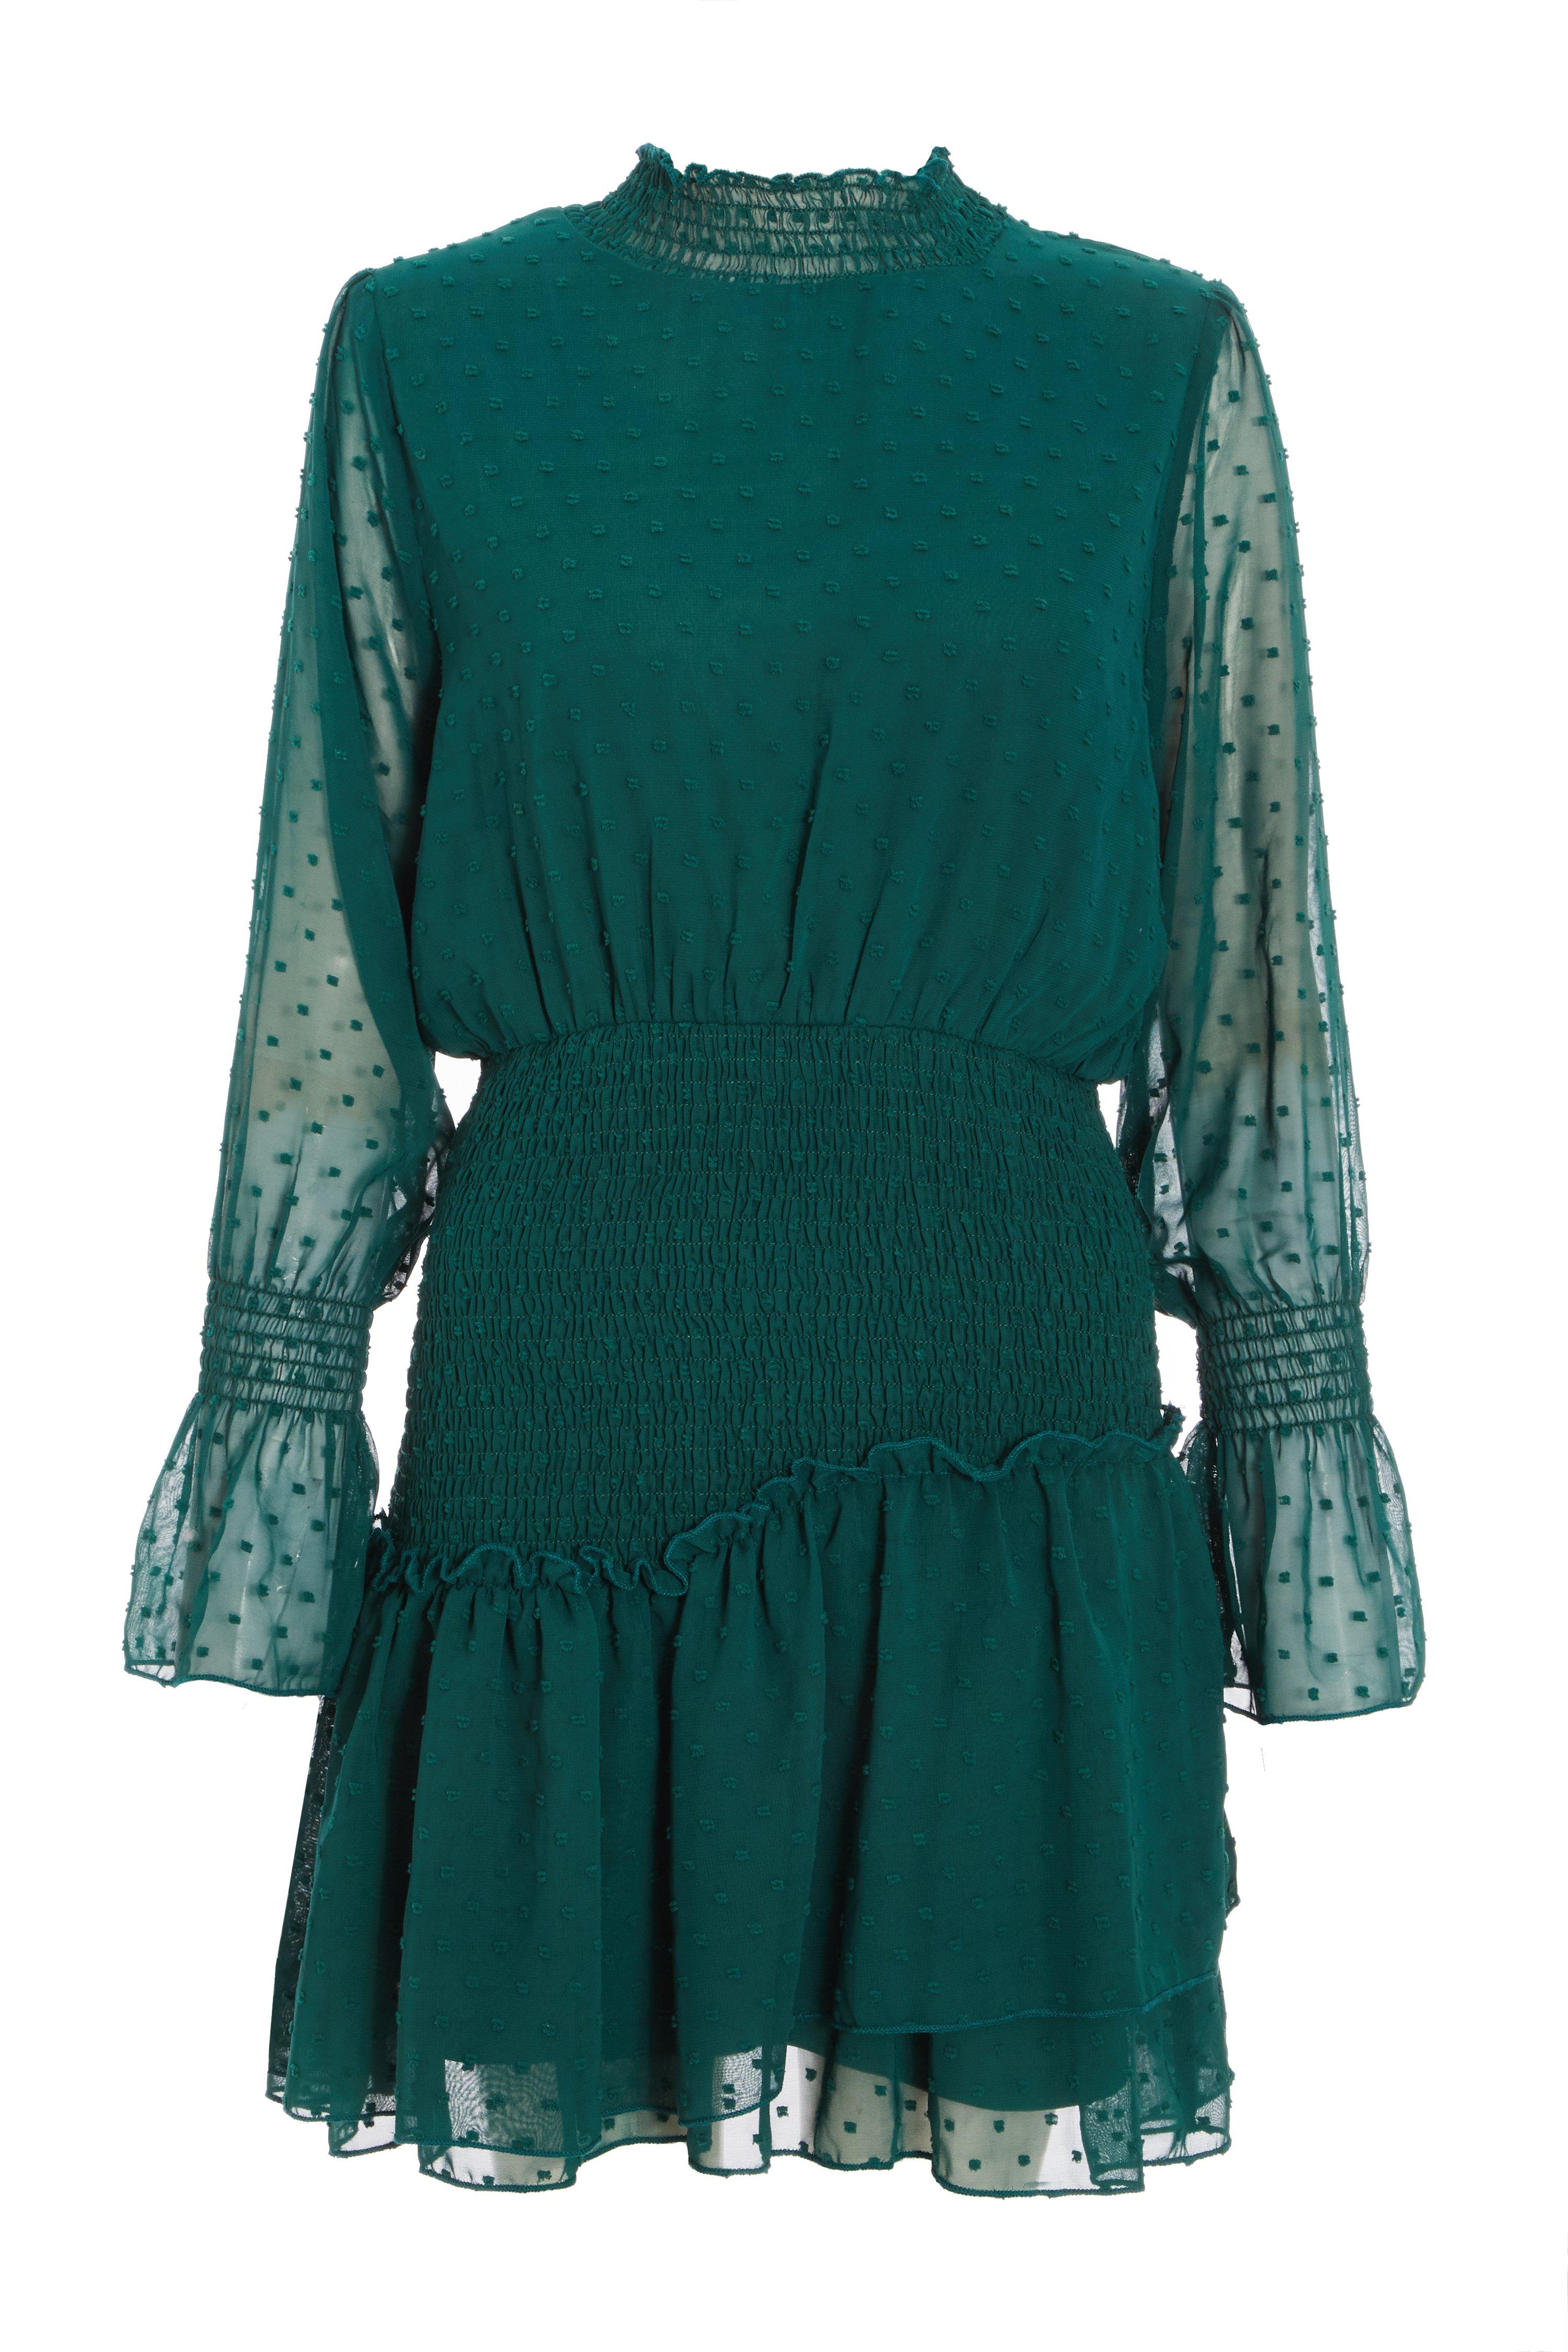 Bottle Green Chiffon Shirred Dress - Quiz Clothing